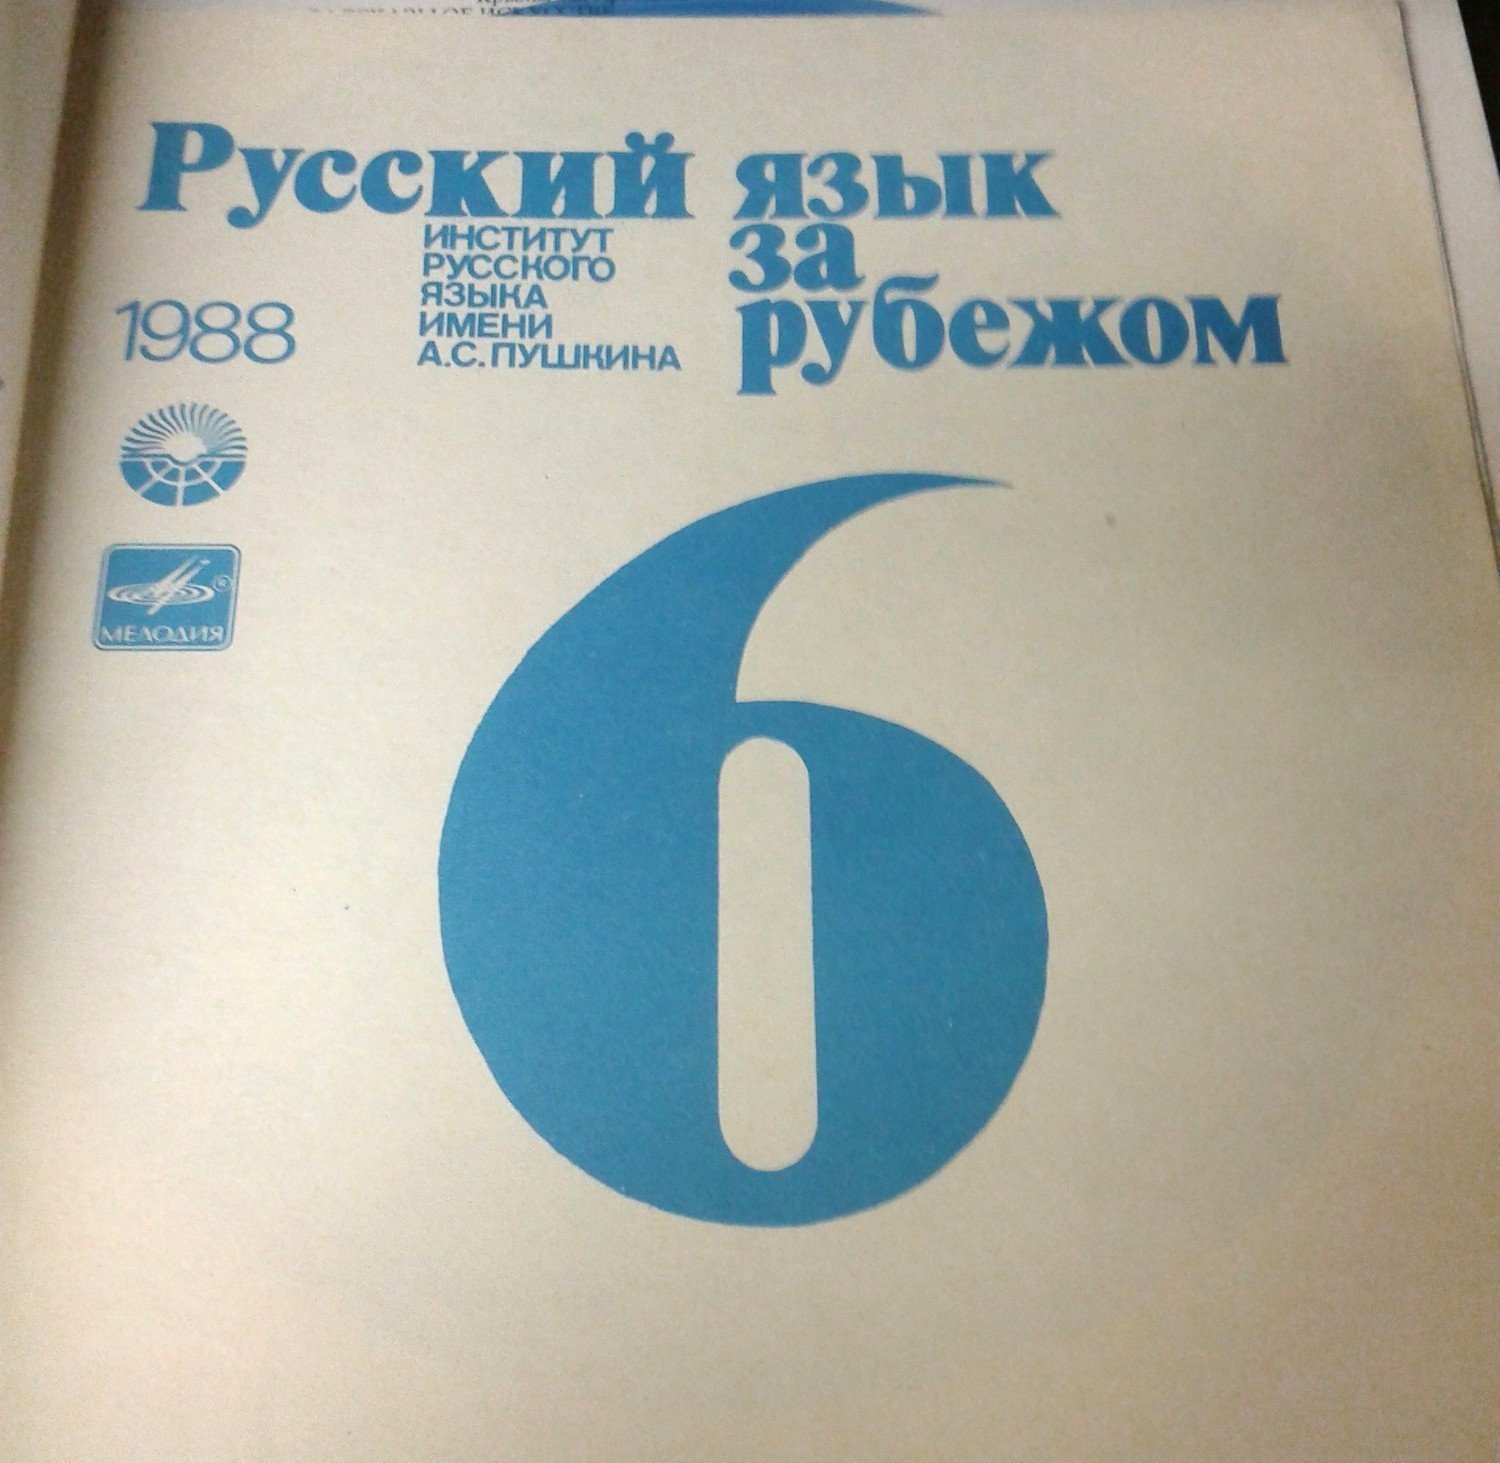 "РУССКИЙ ЯЗЫК ЗА РУБЕЖОМ", № 6 - 1988